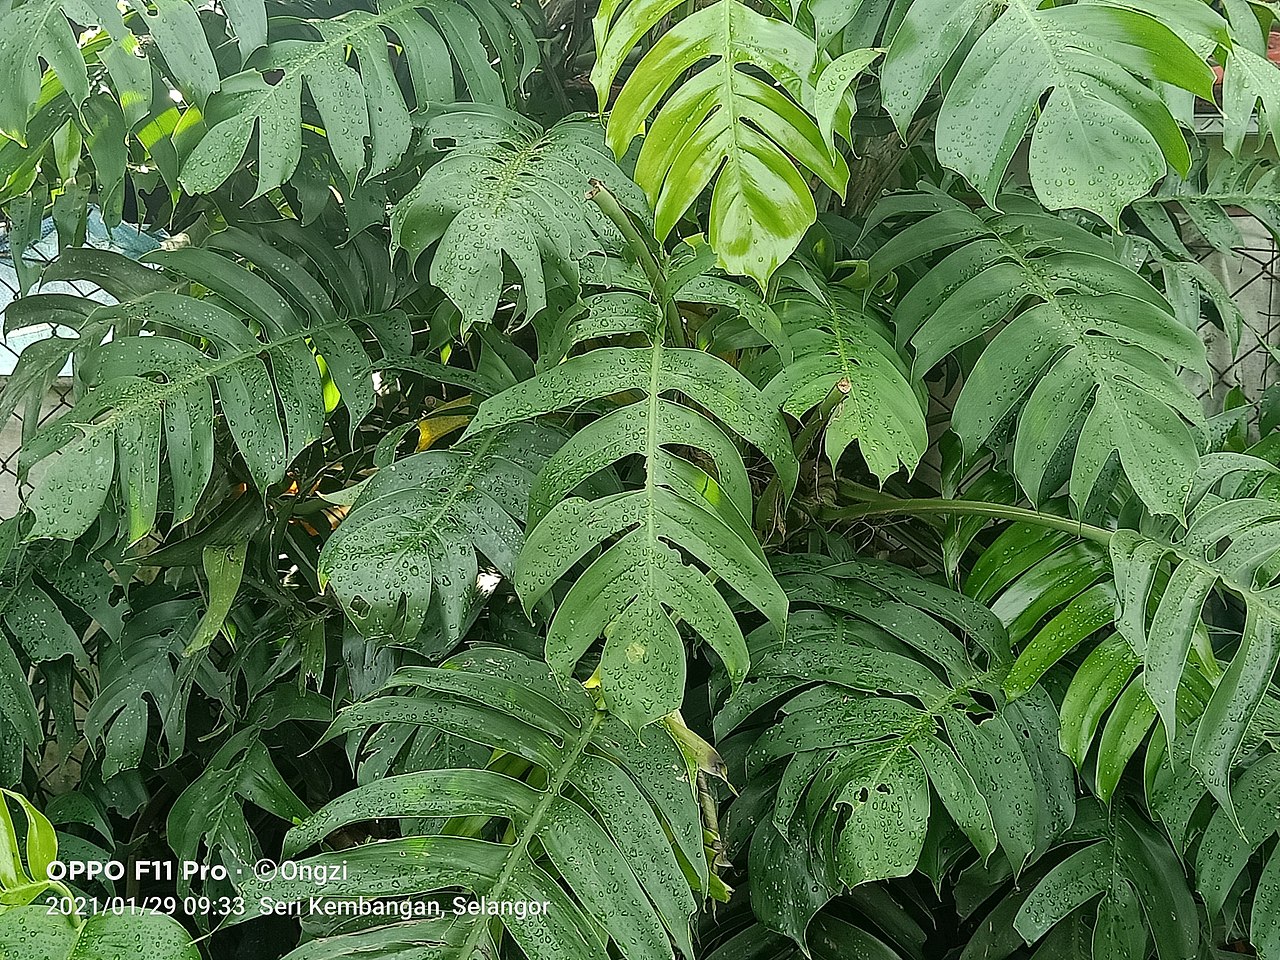 Epipremnum pinnatum has pinnate leaves.